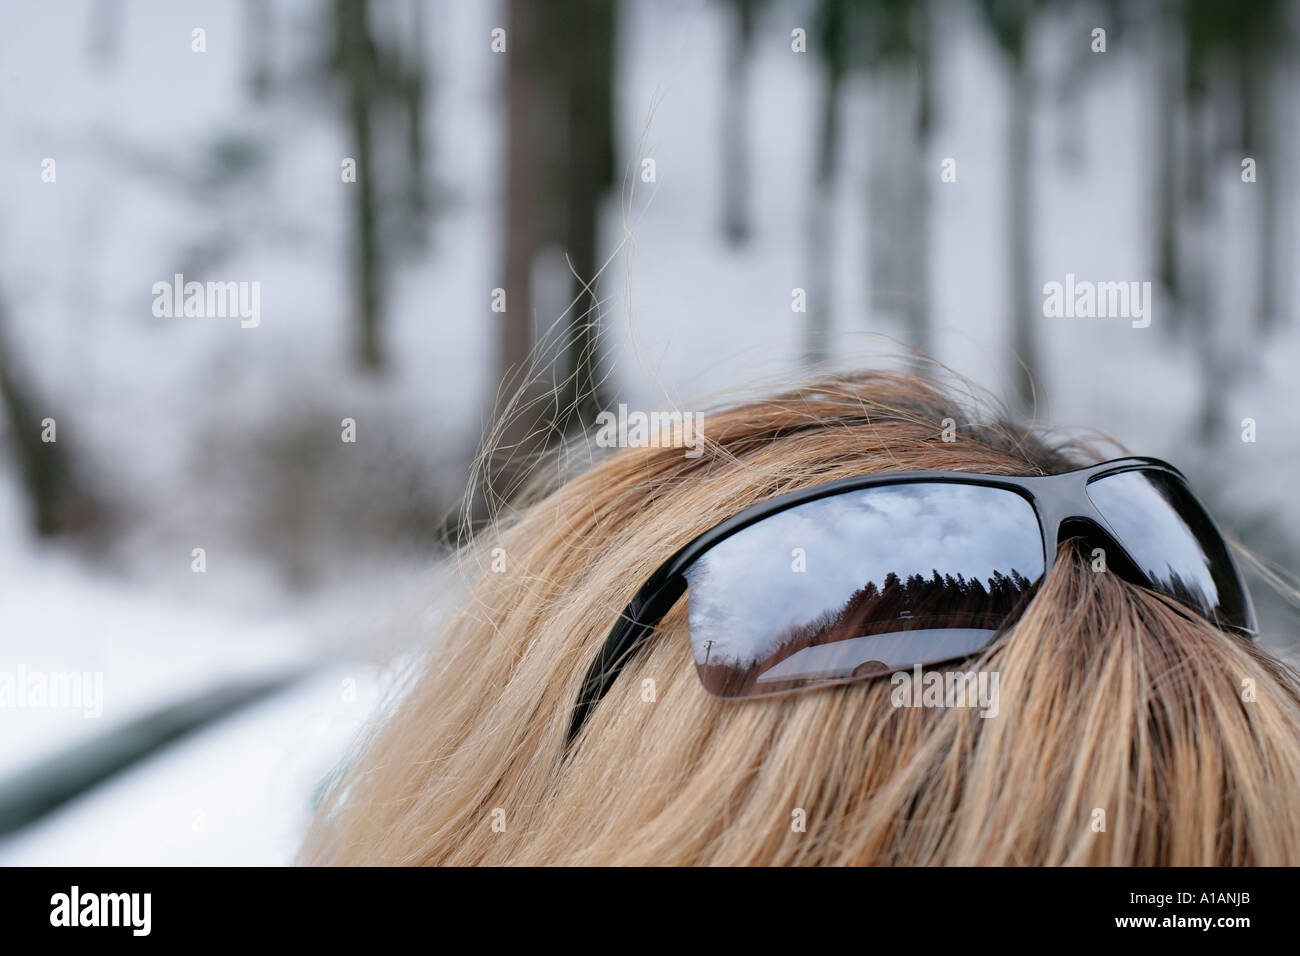 Reflection in sunglasses Stock Photo